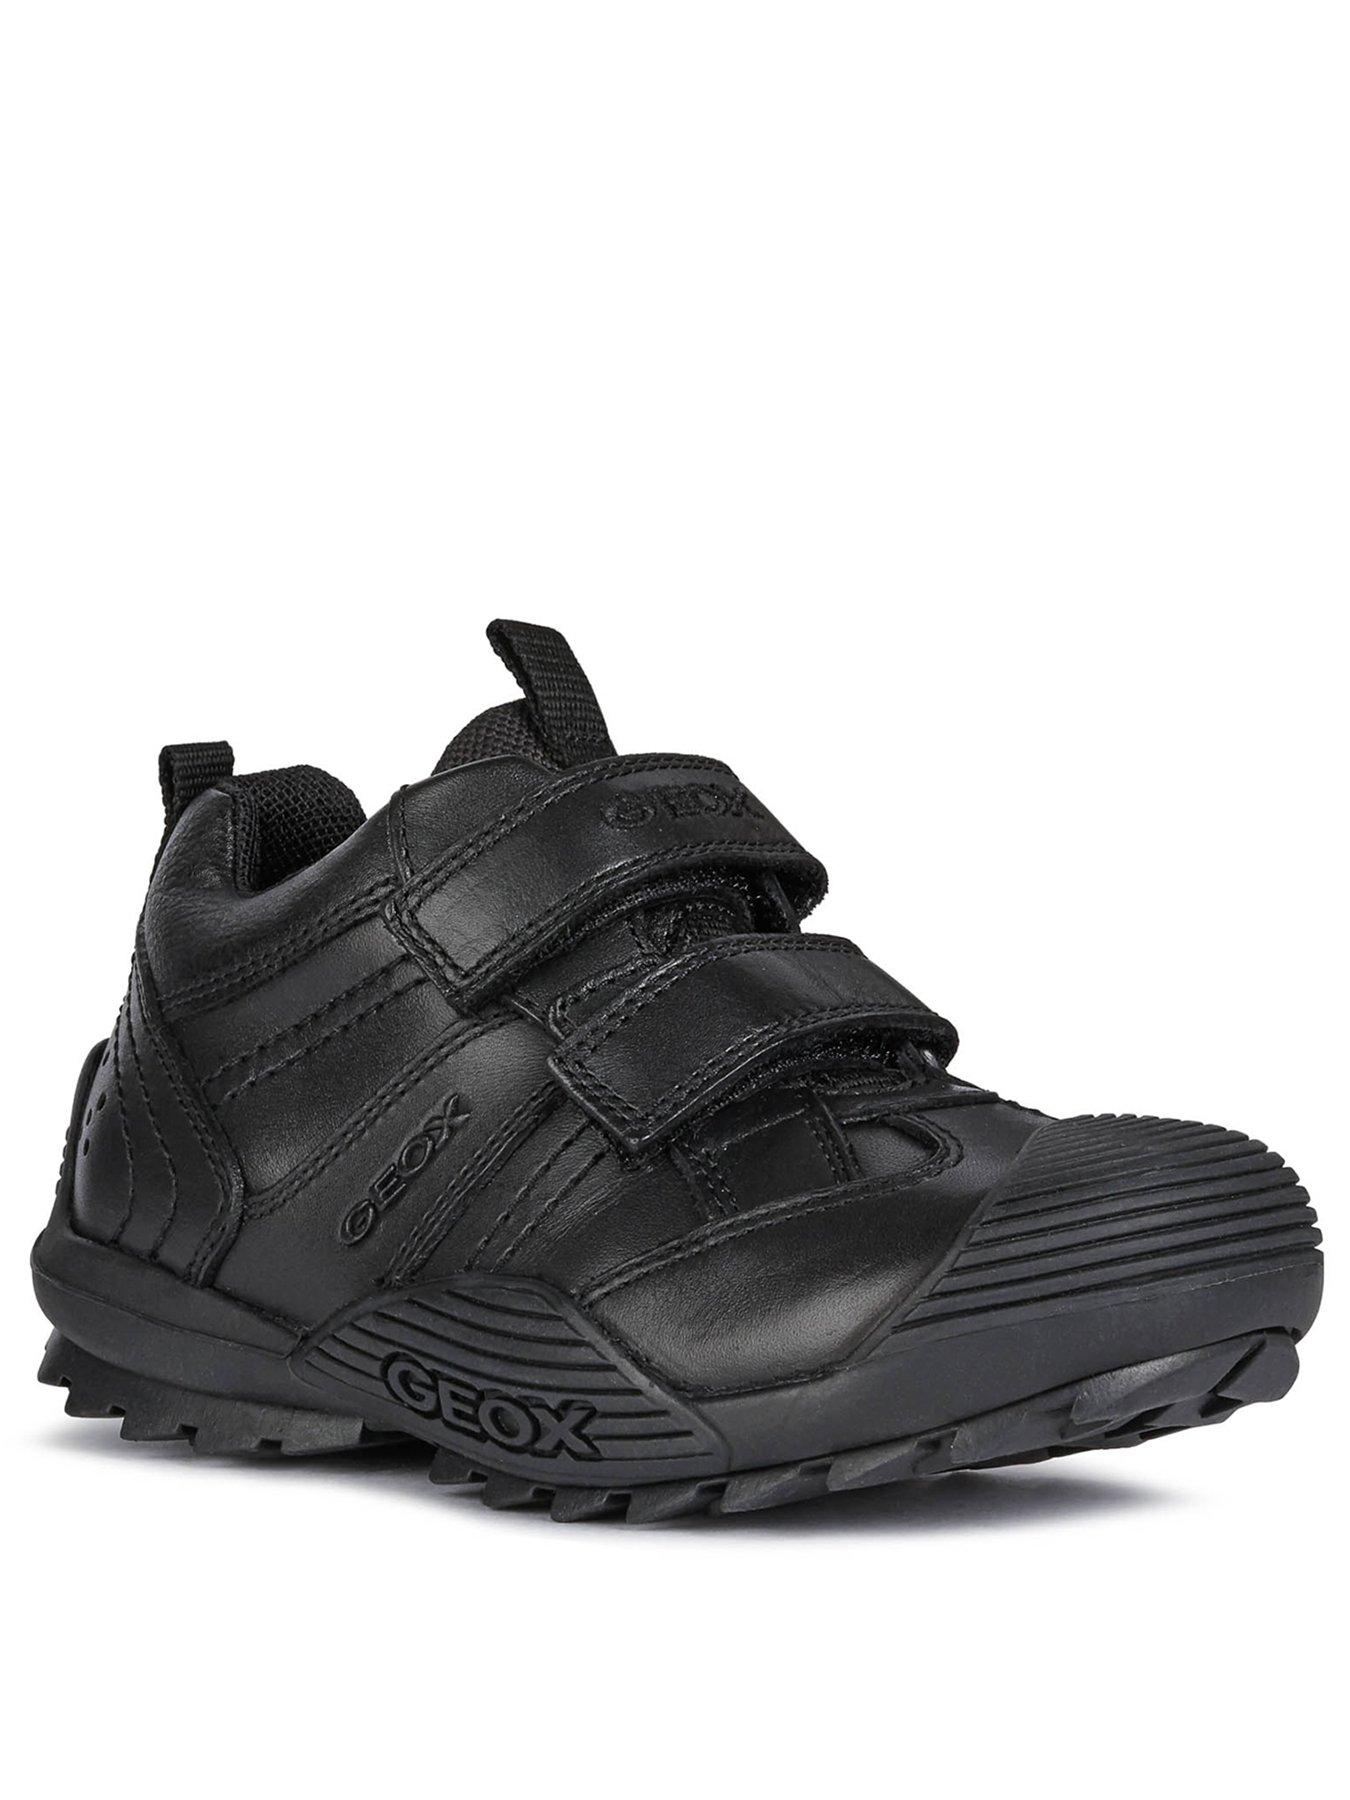  Boys Savage Leather Strap School Shoe - Black